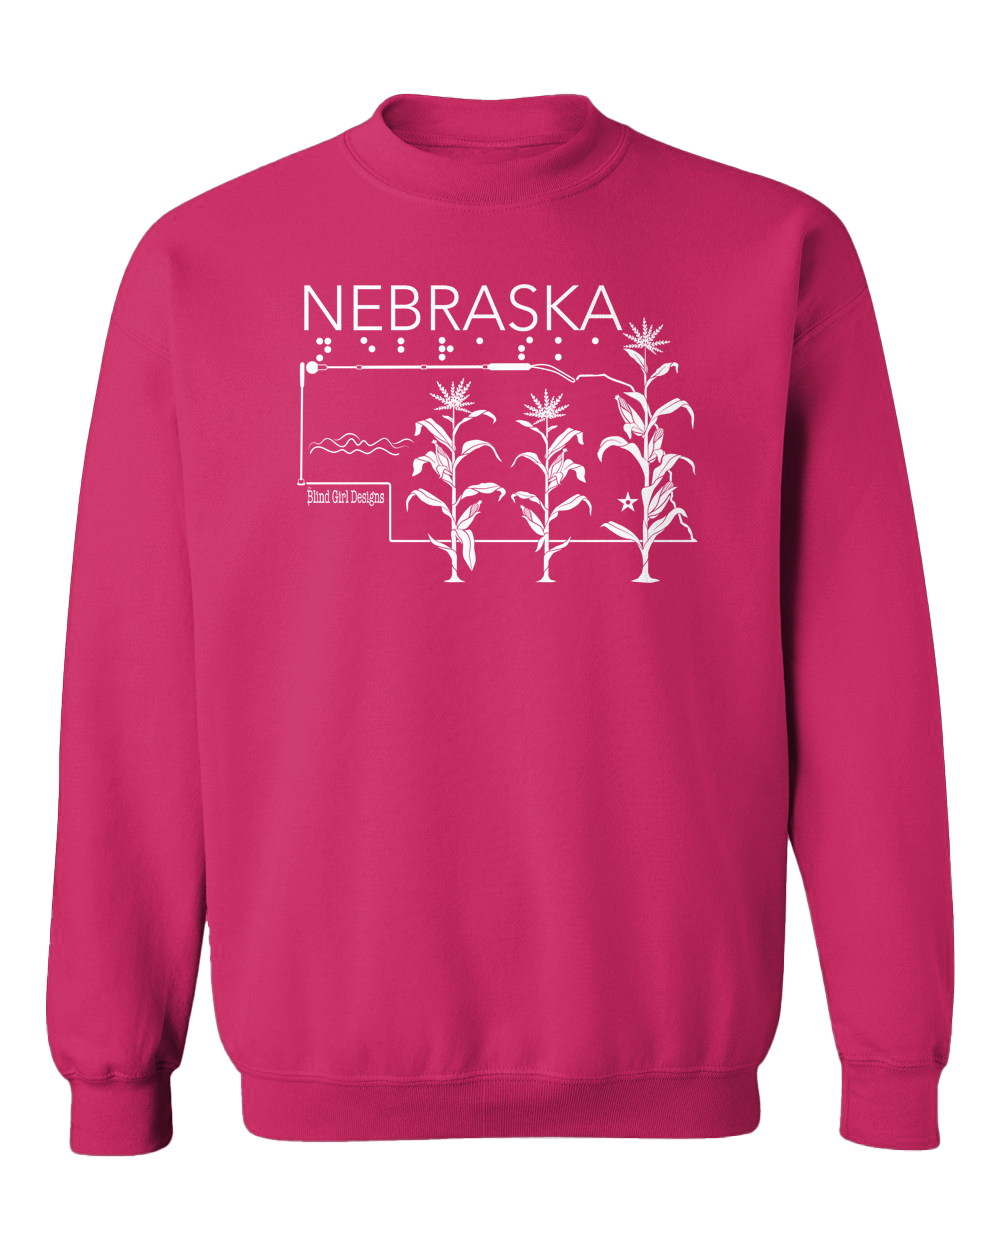 New 3D Tactile! Nebraska State Sweatshirt - Pink